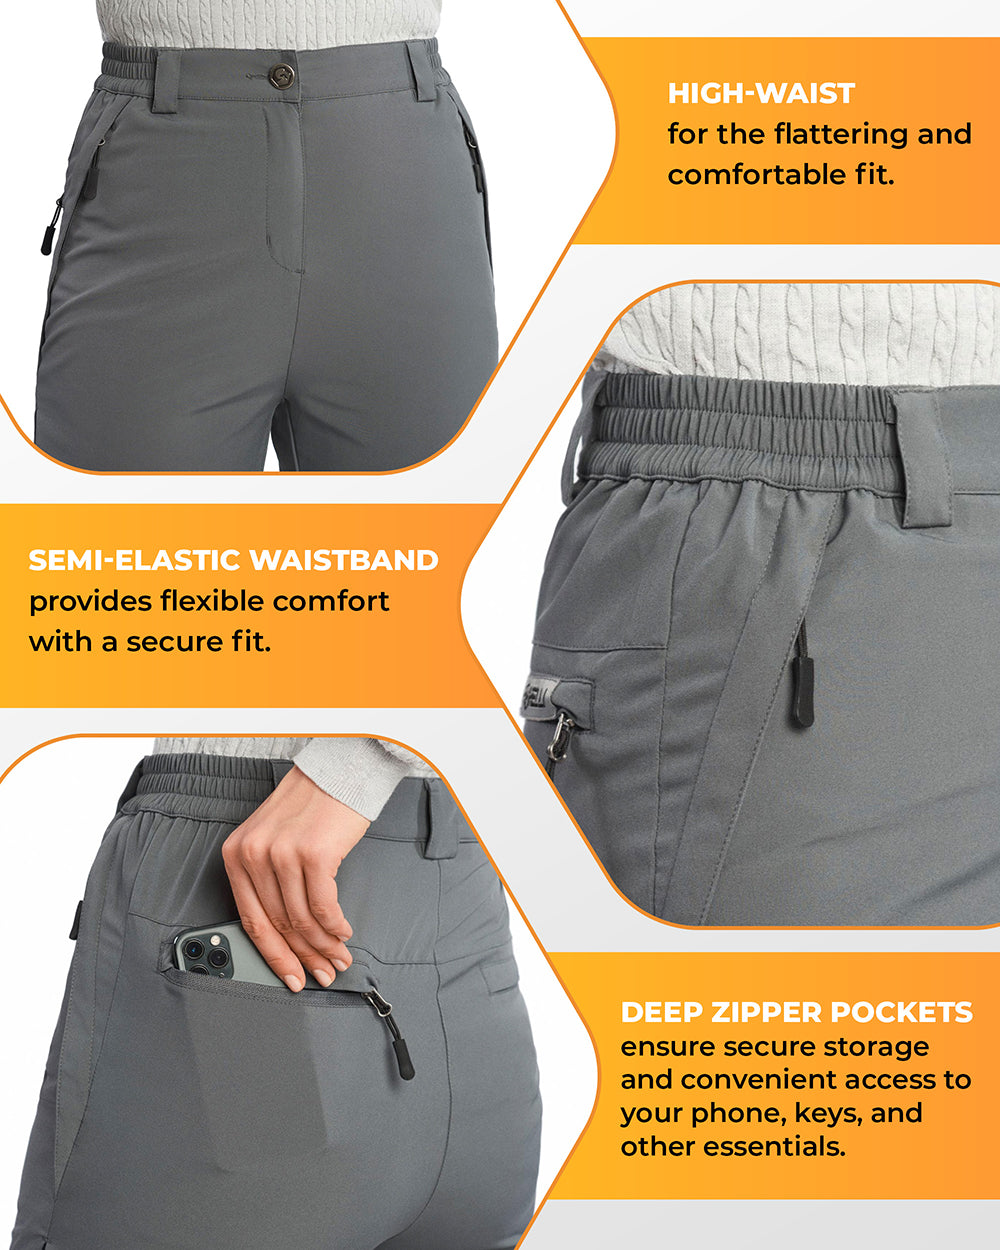 ZERDOCEAN Women's Plus Size Capri Hiking Pants Lightweight Quick Dry Athletic Pants Drawstring Zipper Pockets